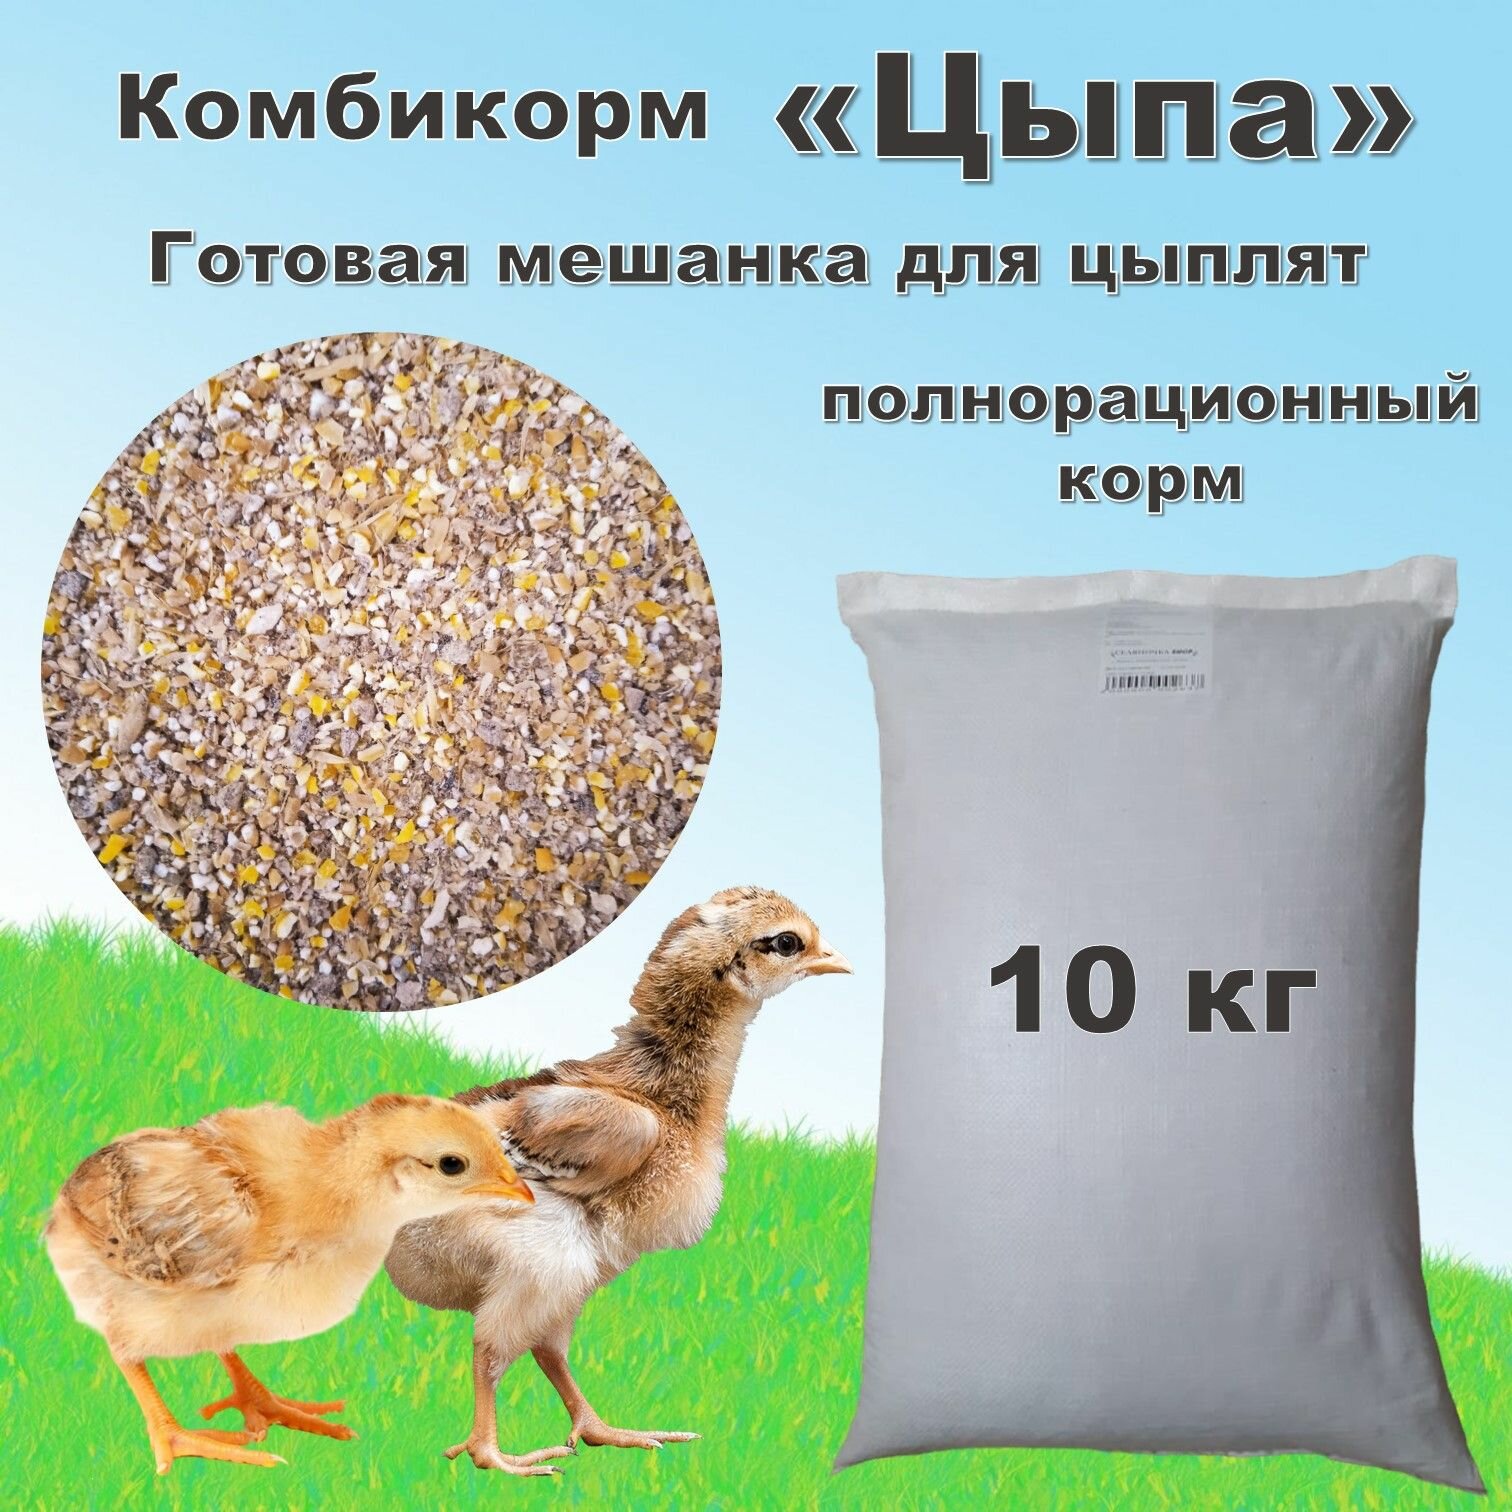 Комбикорм для цыплят "Цыпа" (Рост от 5 недель) готовая мешанка, 10 кг